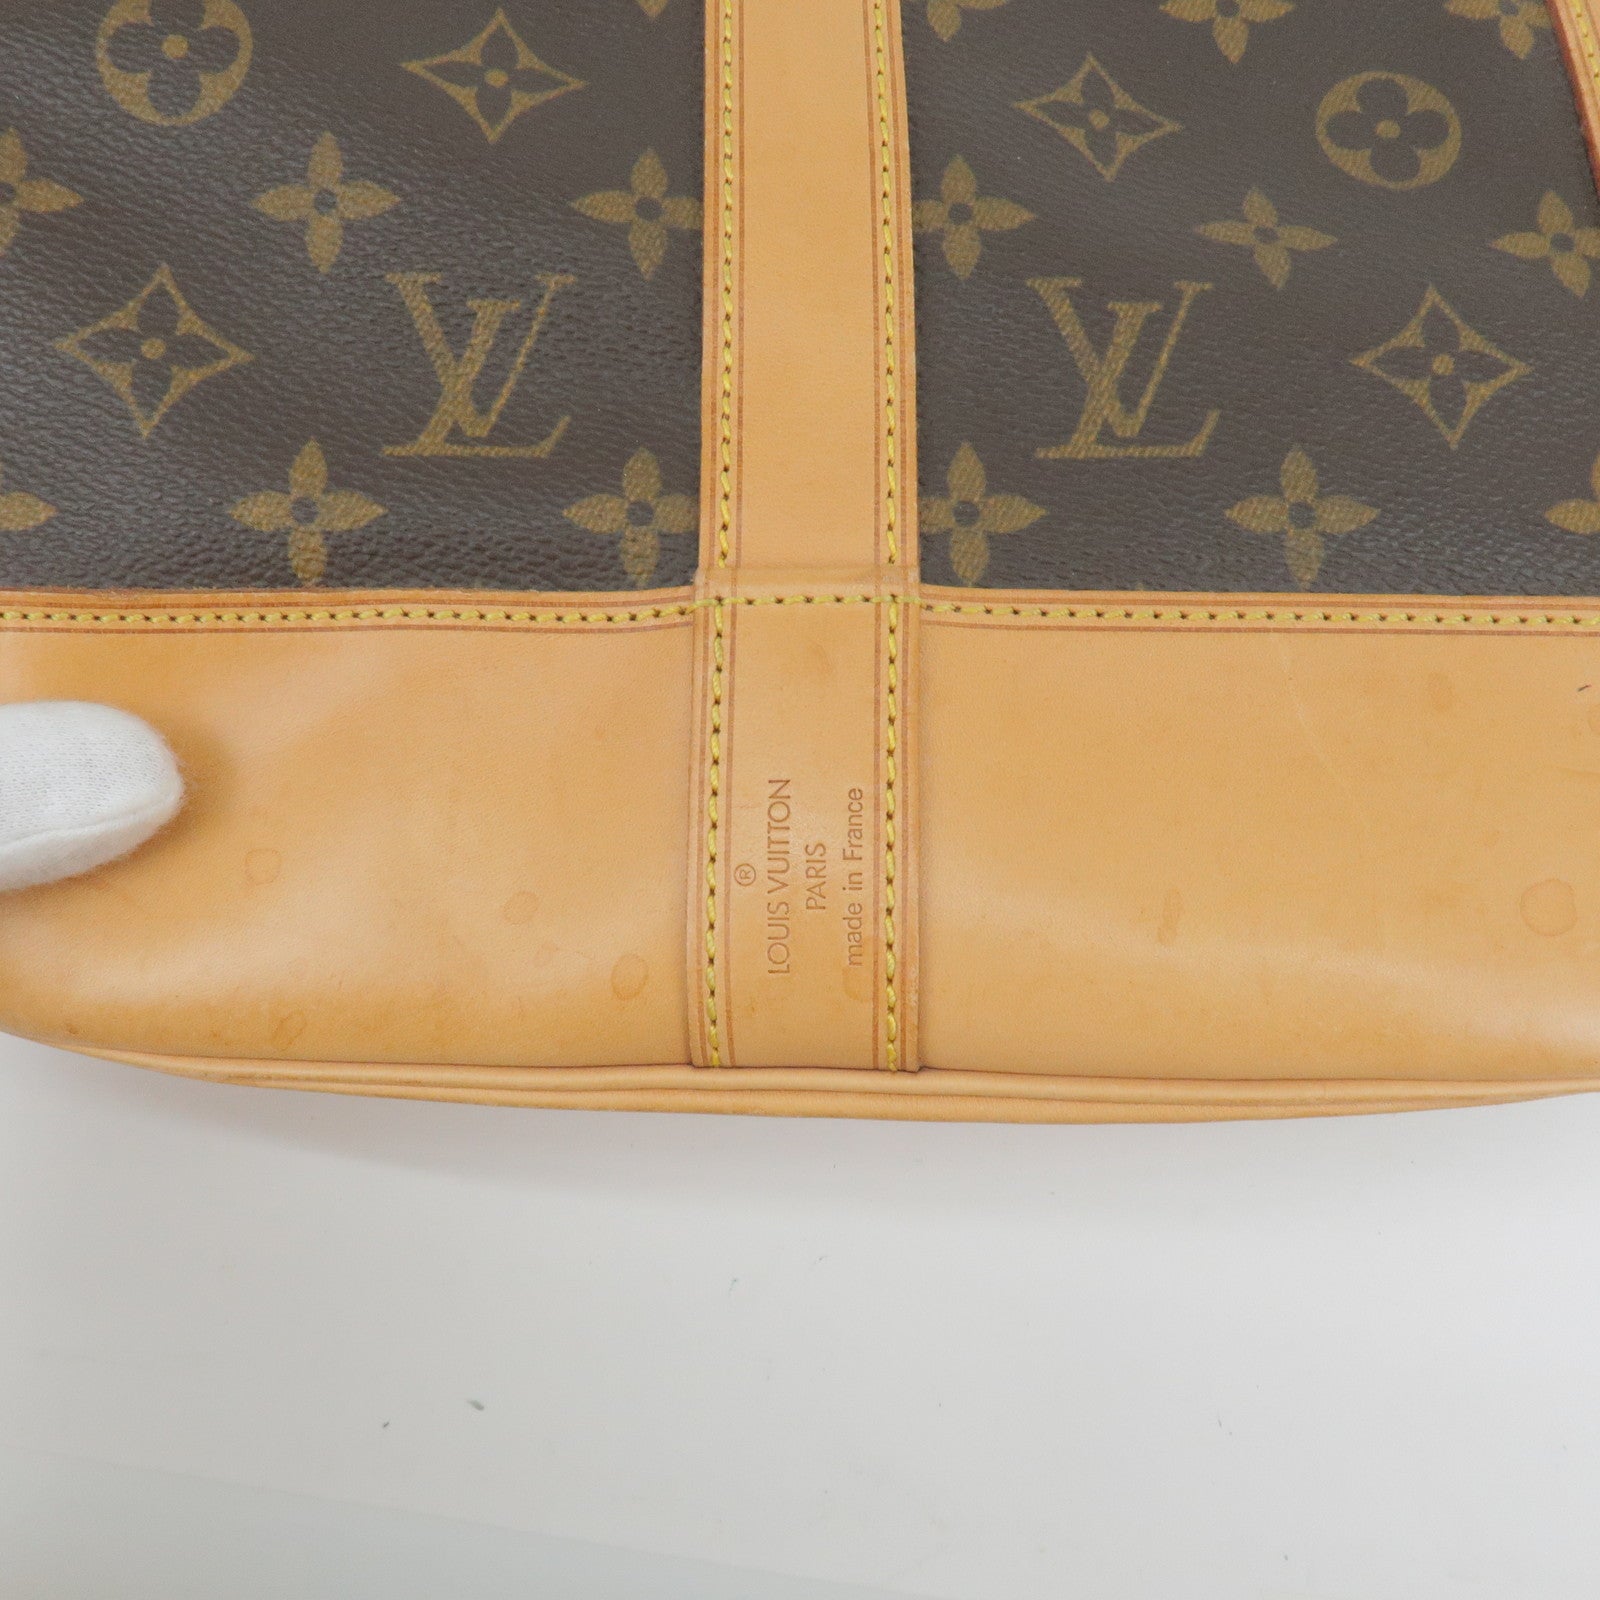 Designer Bags Review: Louis Vuitton Randonnee Bag - Bags of